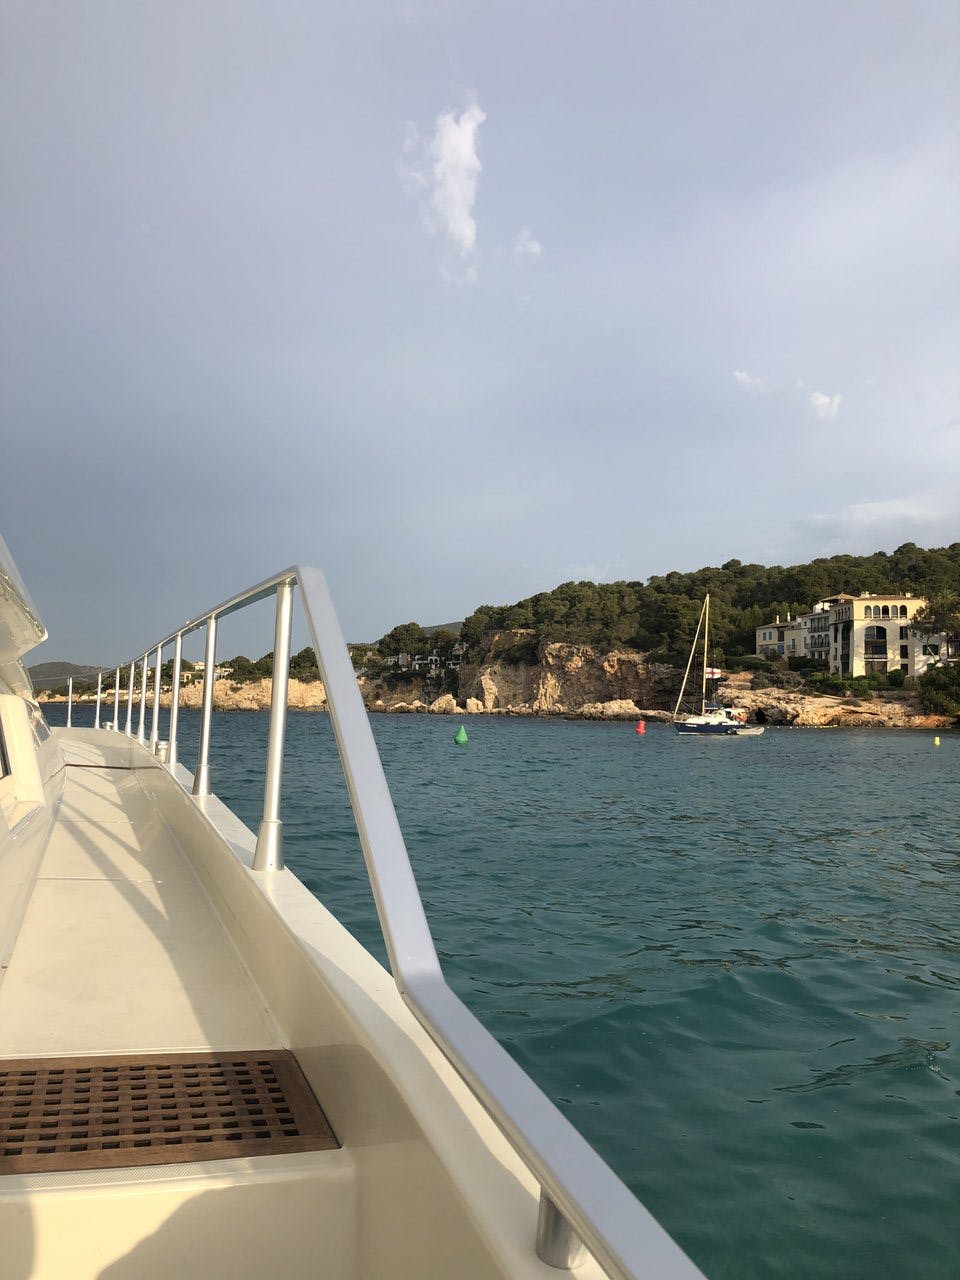 Book Ferretti Yachts 175 Fly Motor yacht for bareboat charter in Palma de Mallorca, La Lonja, Balearic Islands, Spain with TripYacht!, picture 21